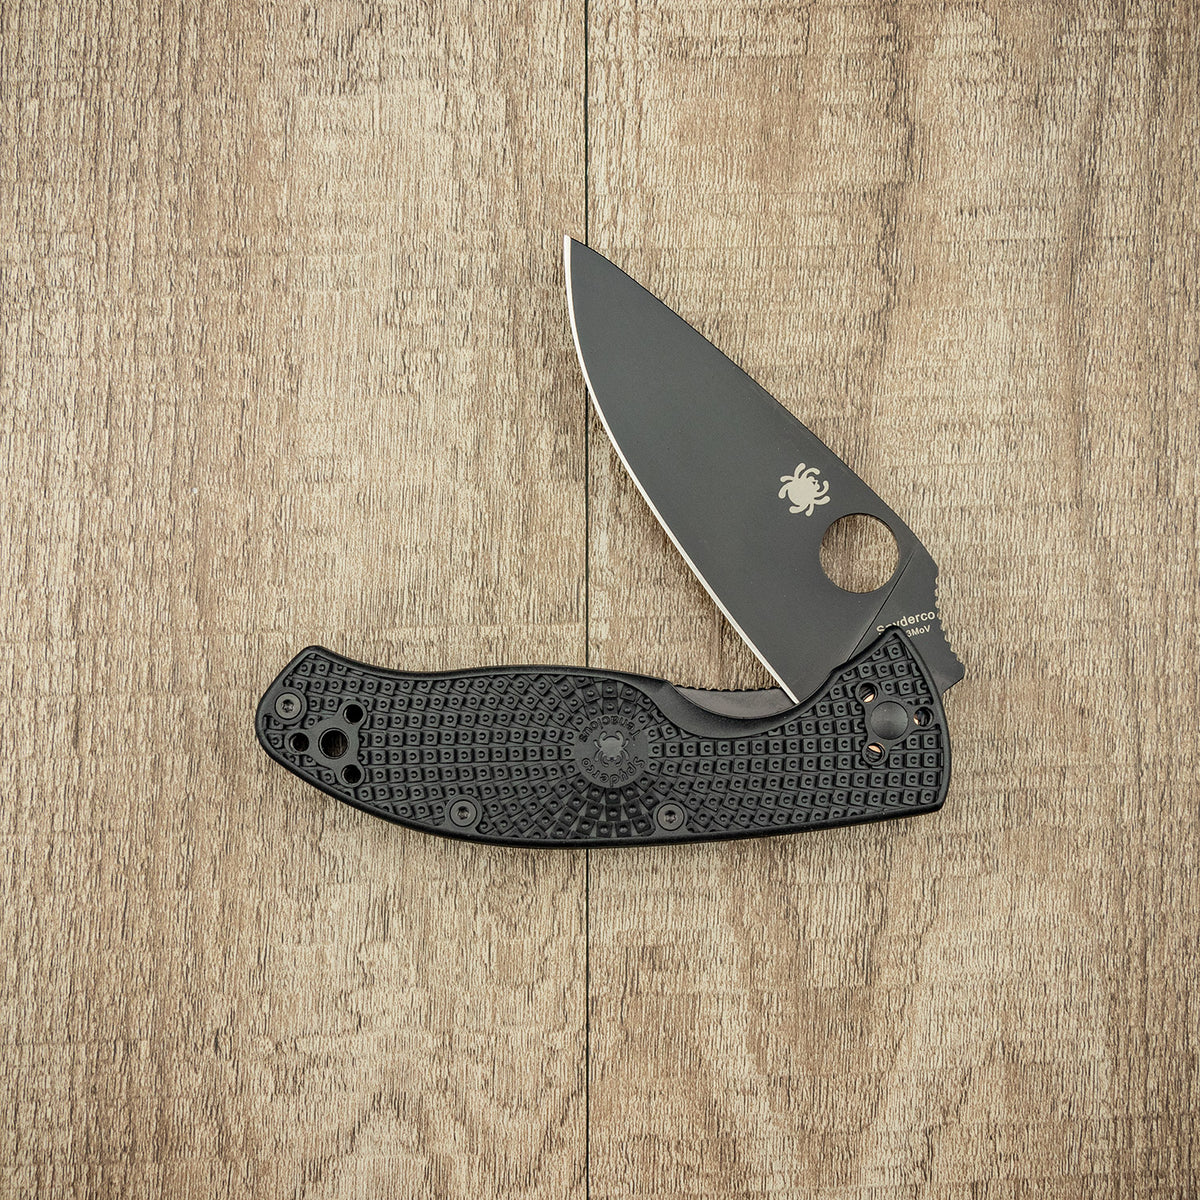 Spyderco Tenacious Lightweight Black Folding Knife